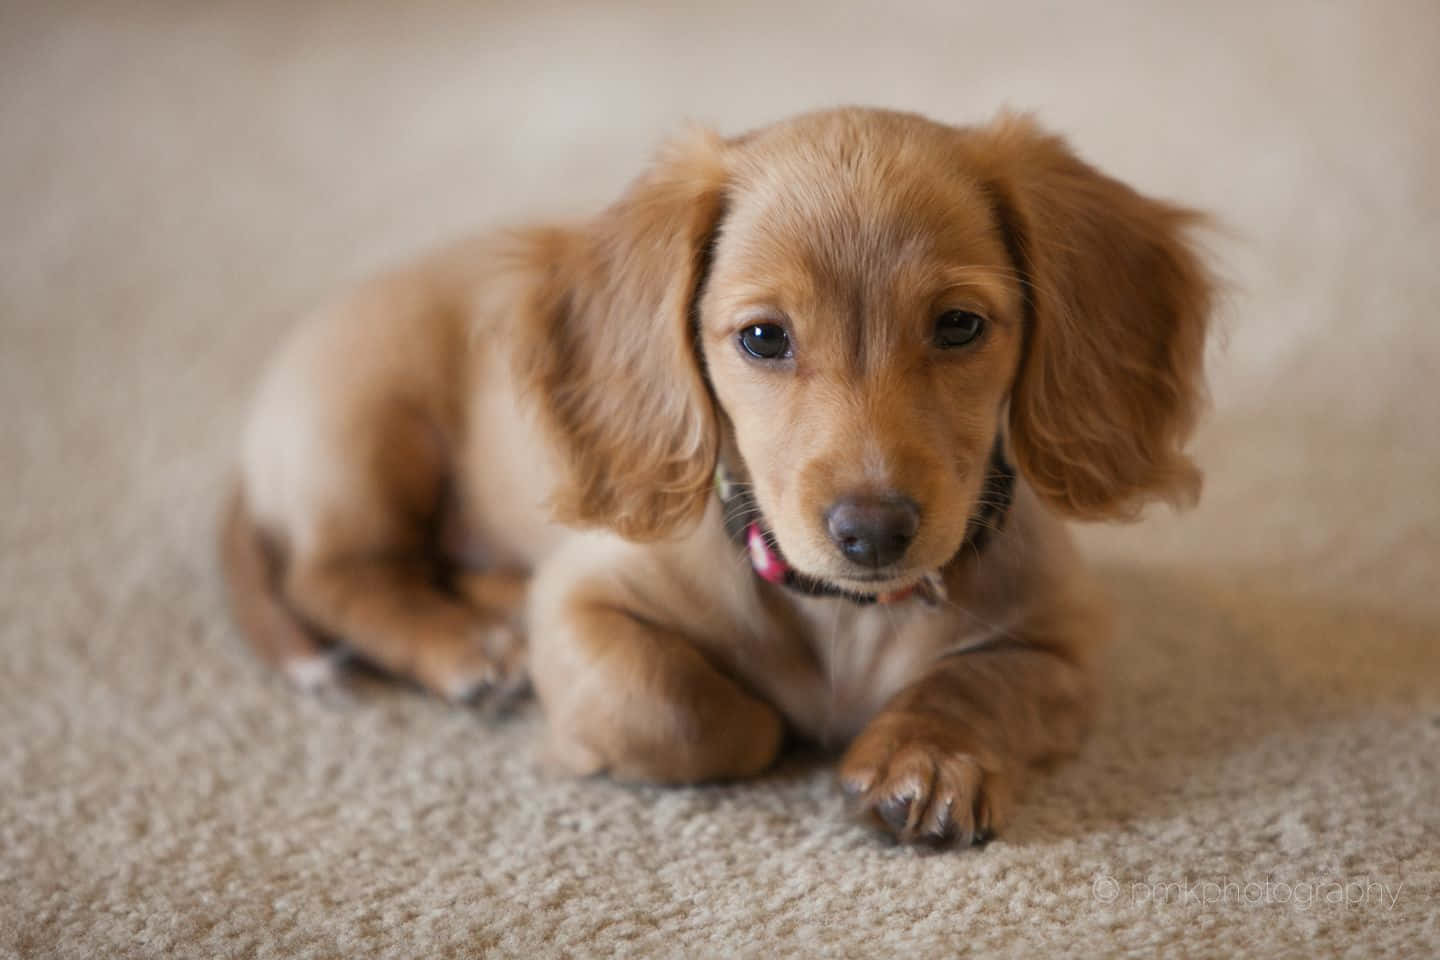 This cute dachshund puppy is ready for cuddles!